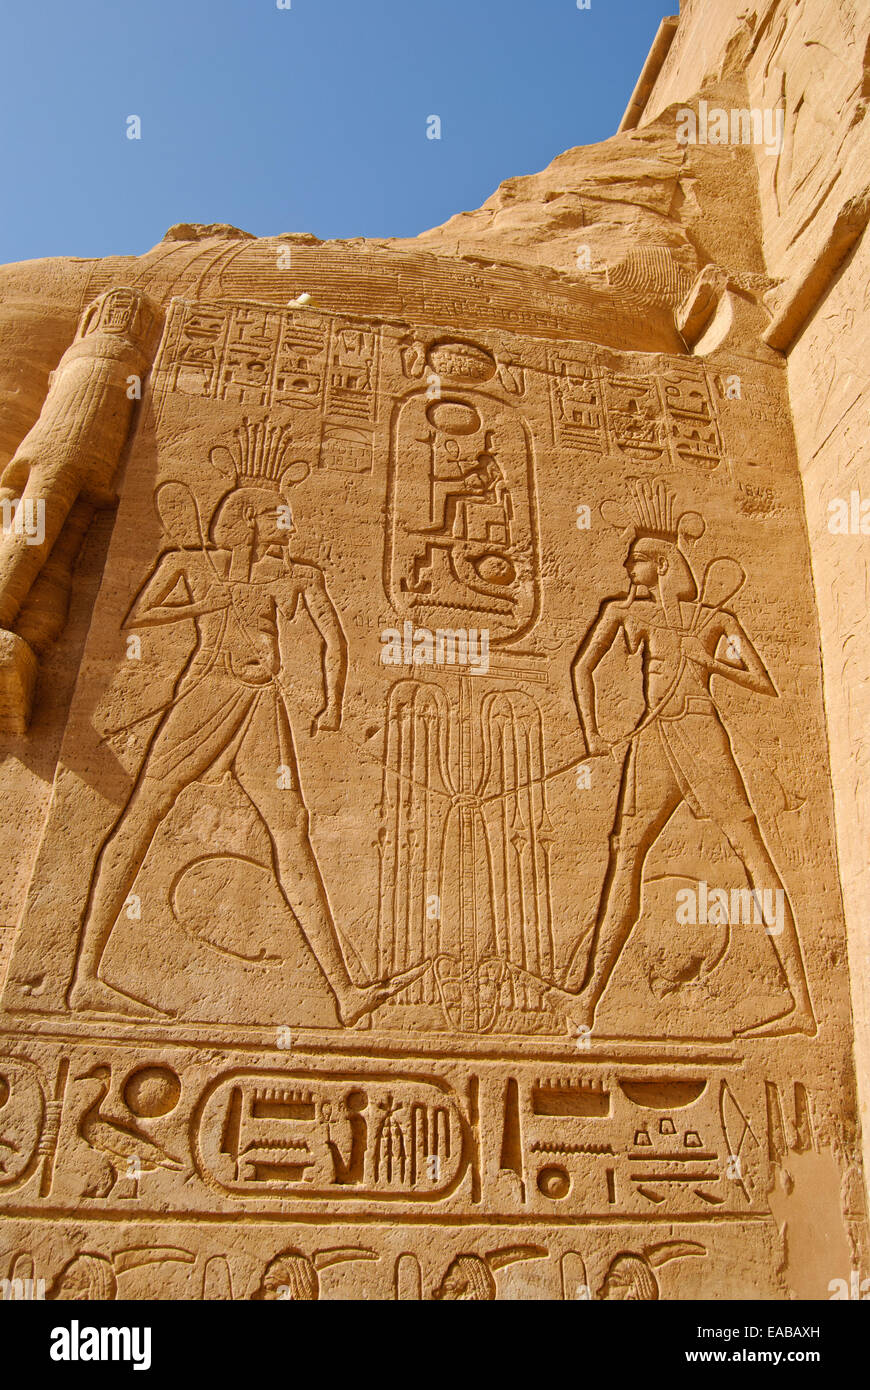 The hieroglyphs at the stone wall of Abu Simbel Stock Photo